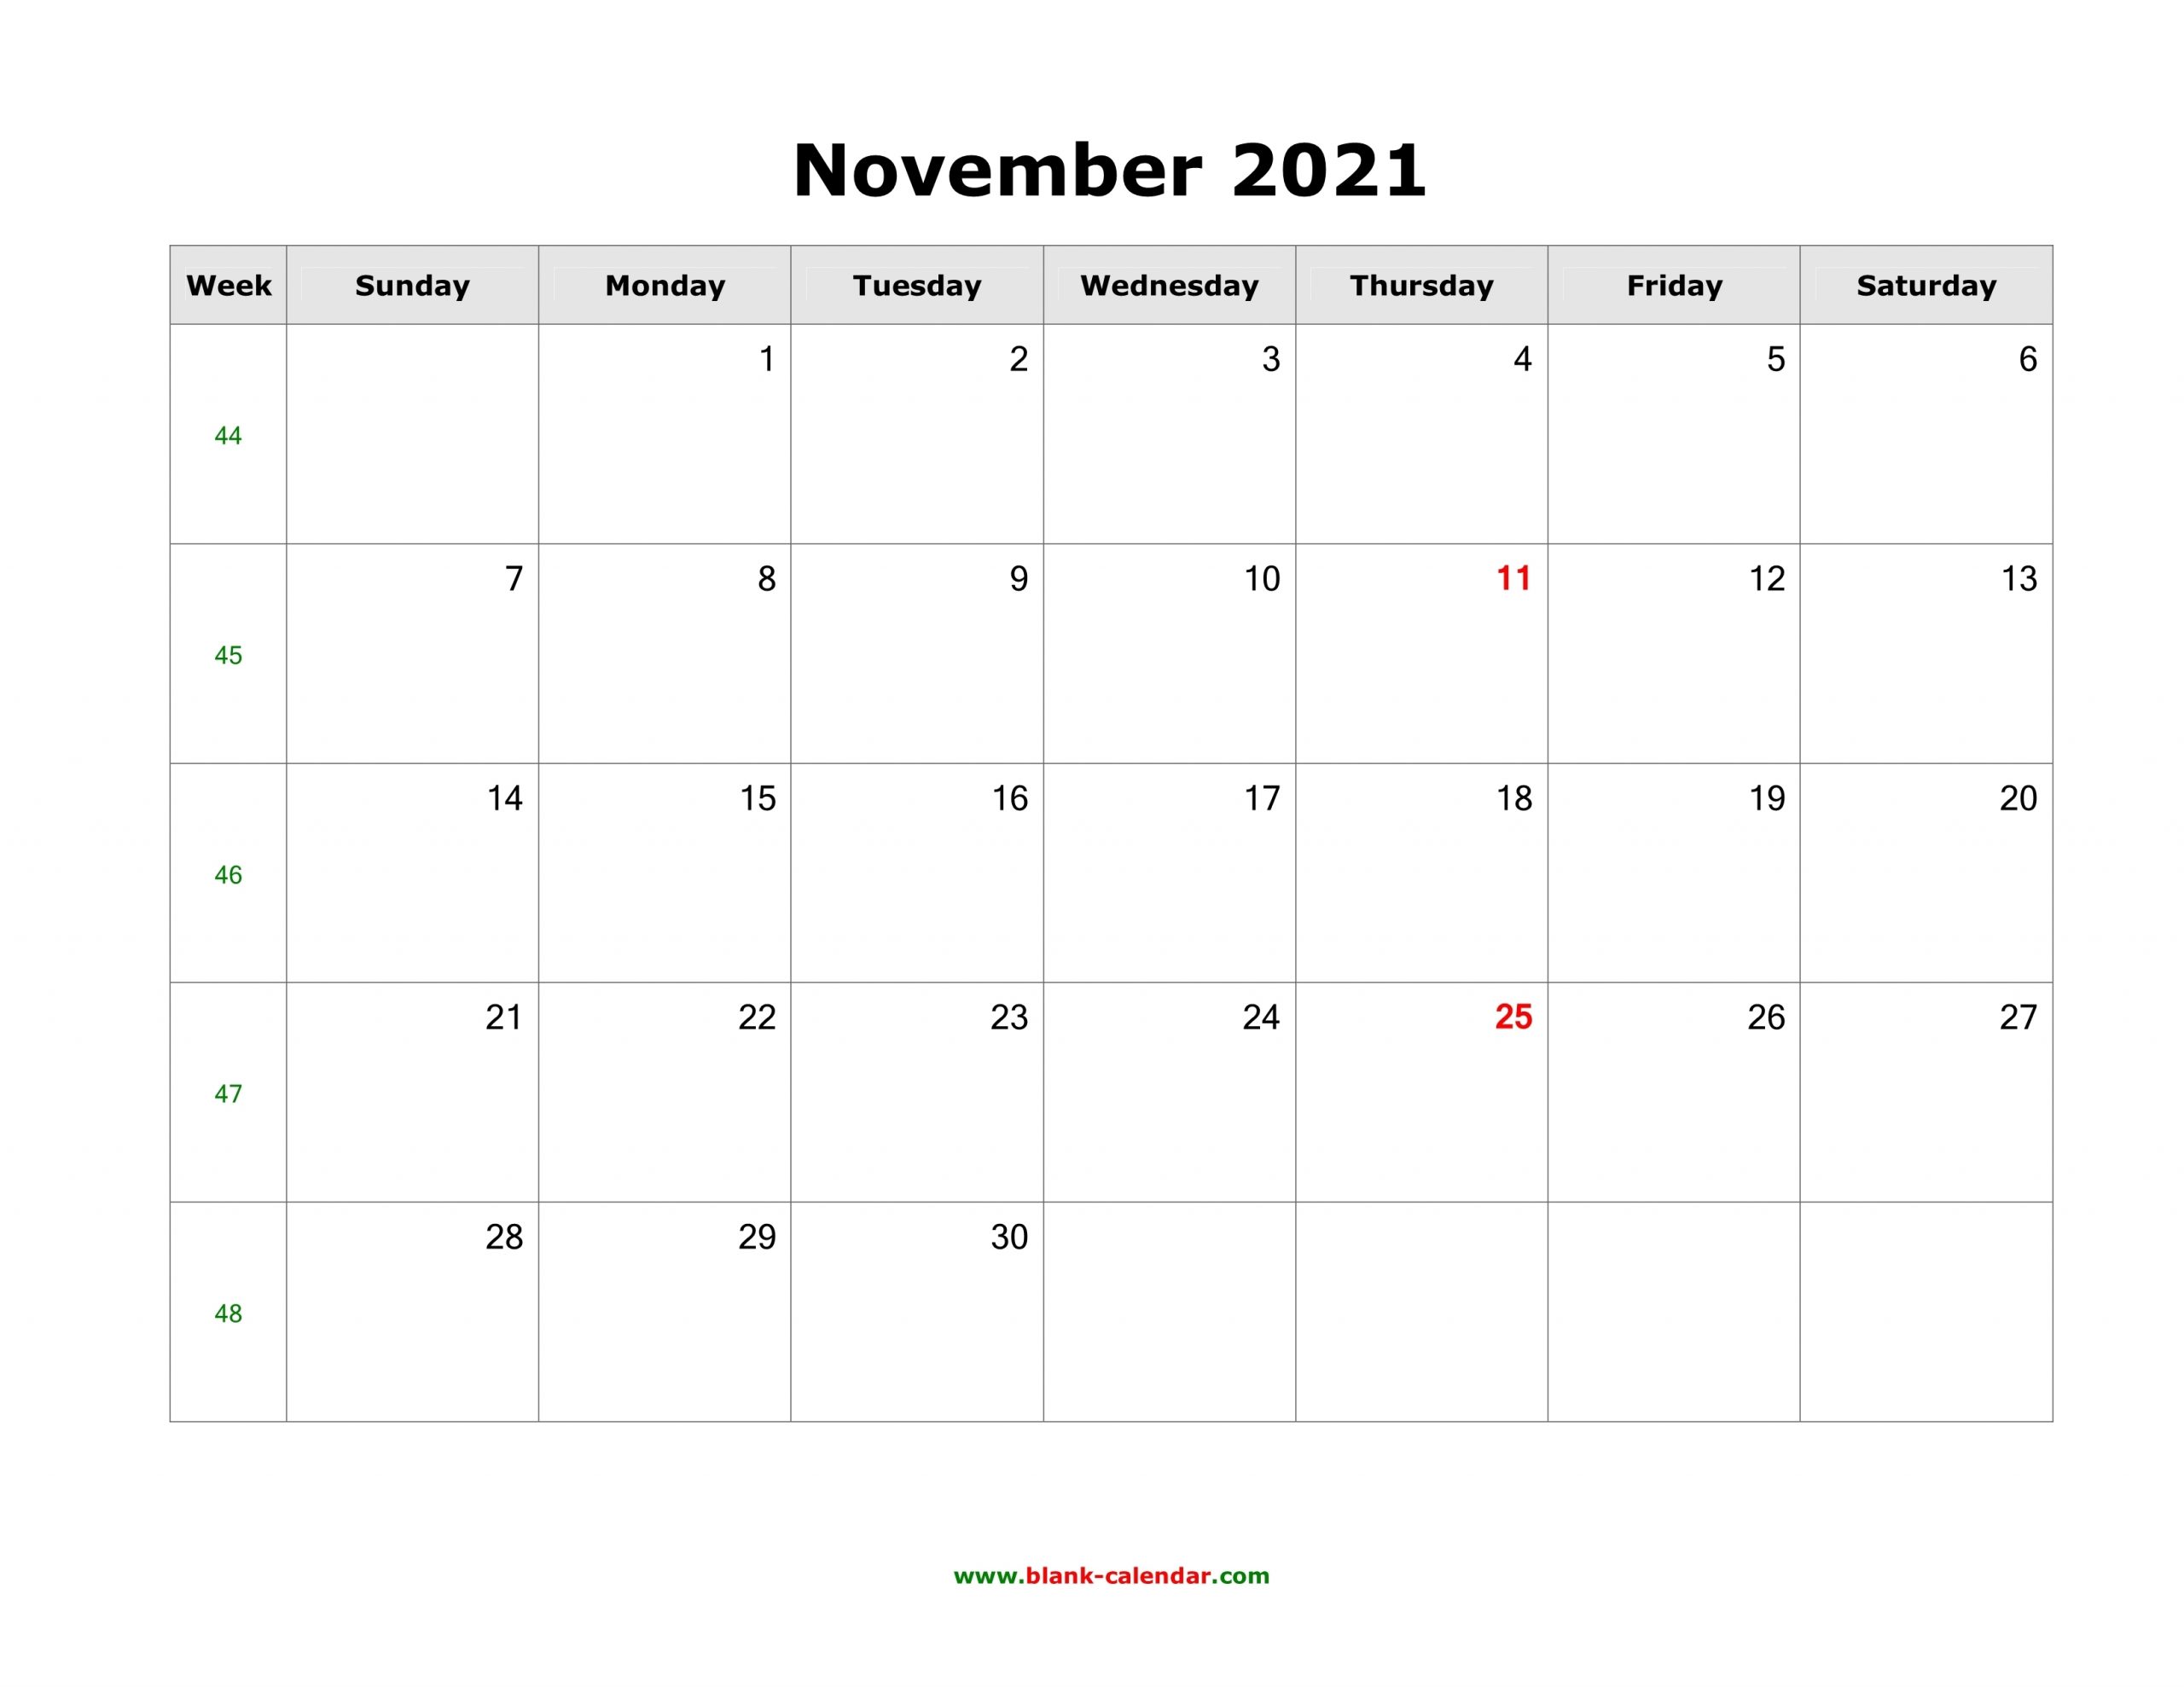 Take Print Free November 2021 Calendar Without Downloading